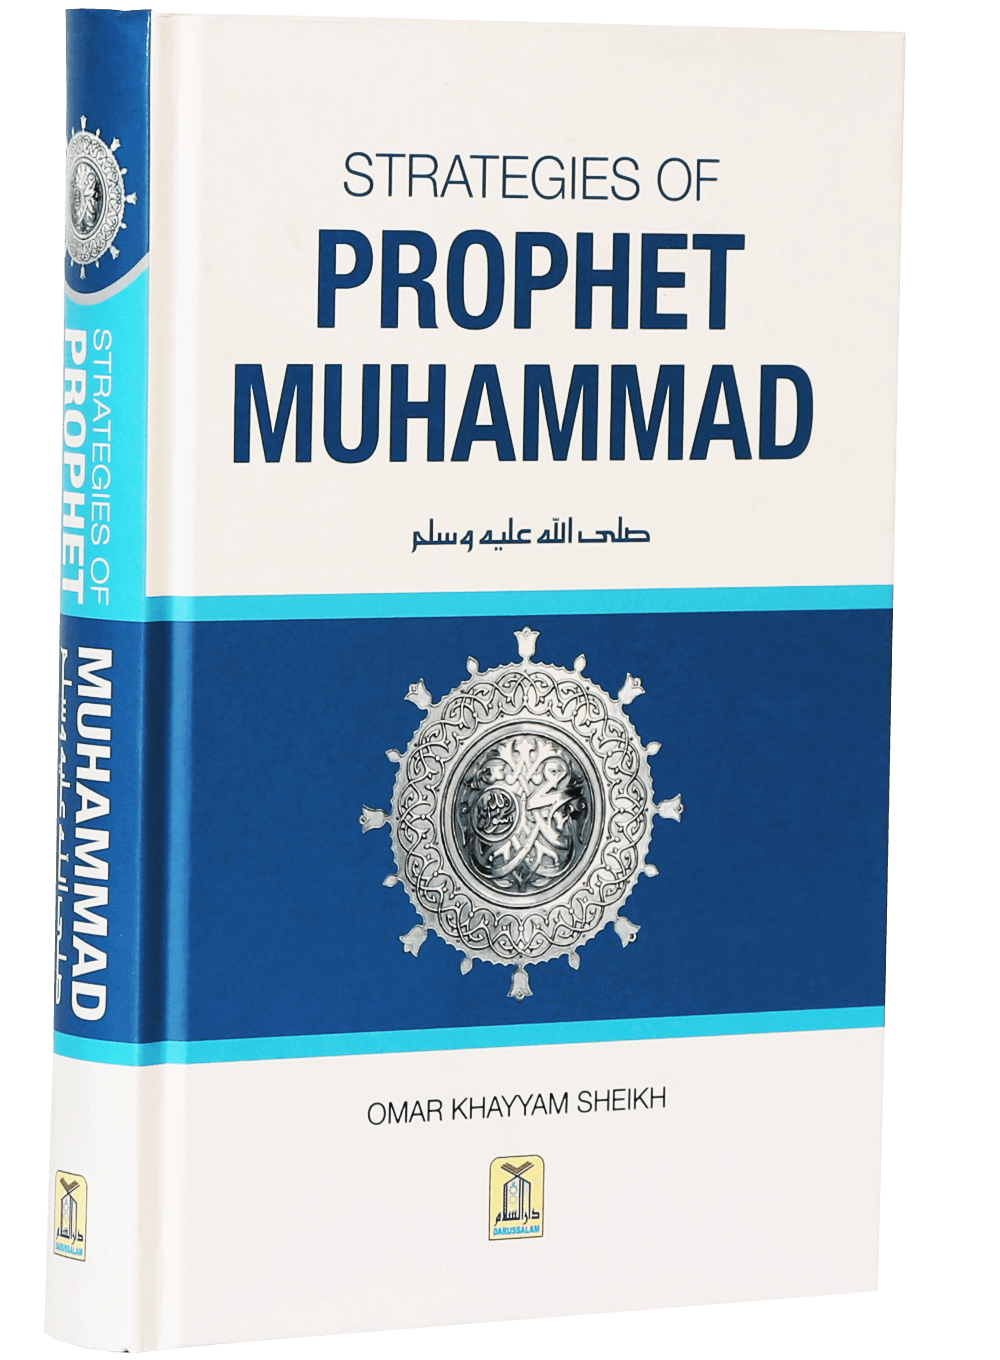 Leadership Strategy of Prophet Muhammad pbuh